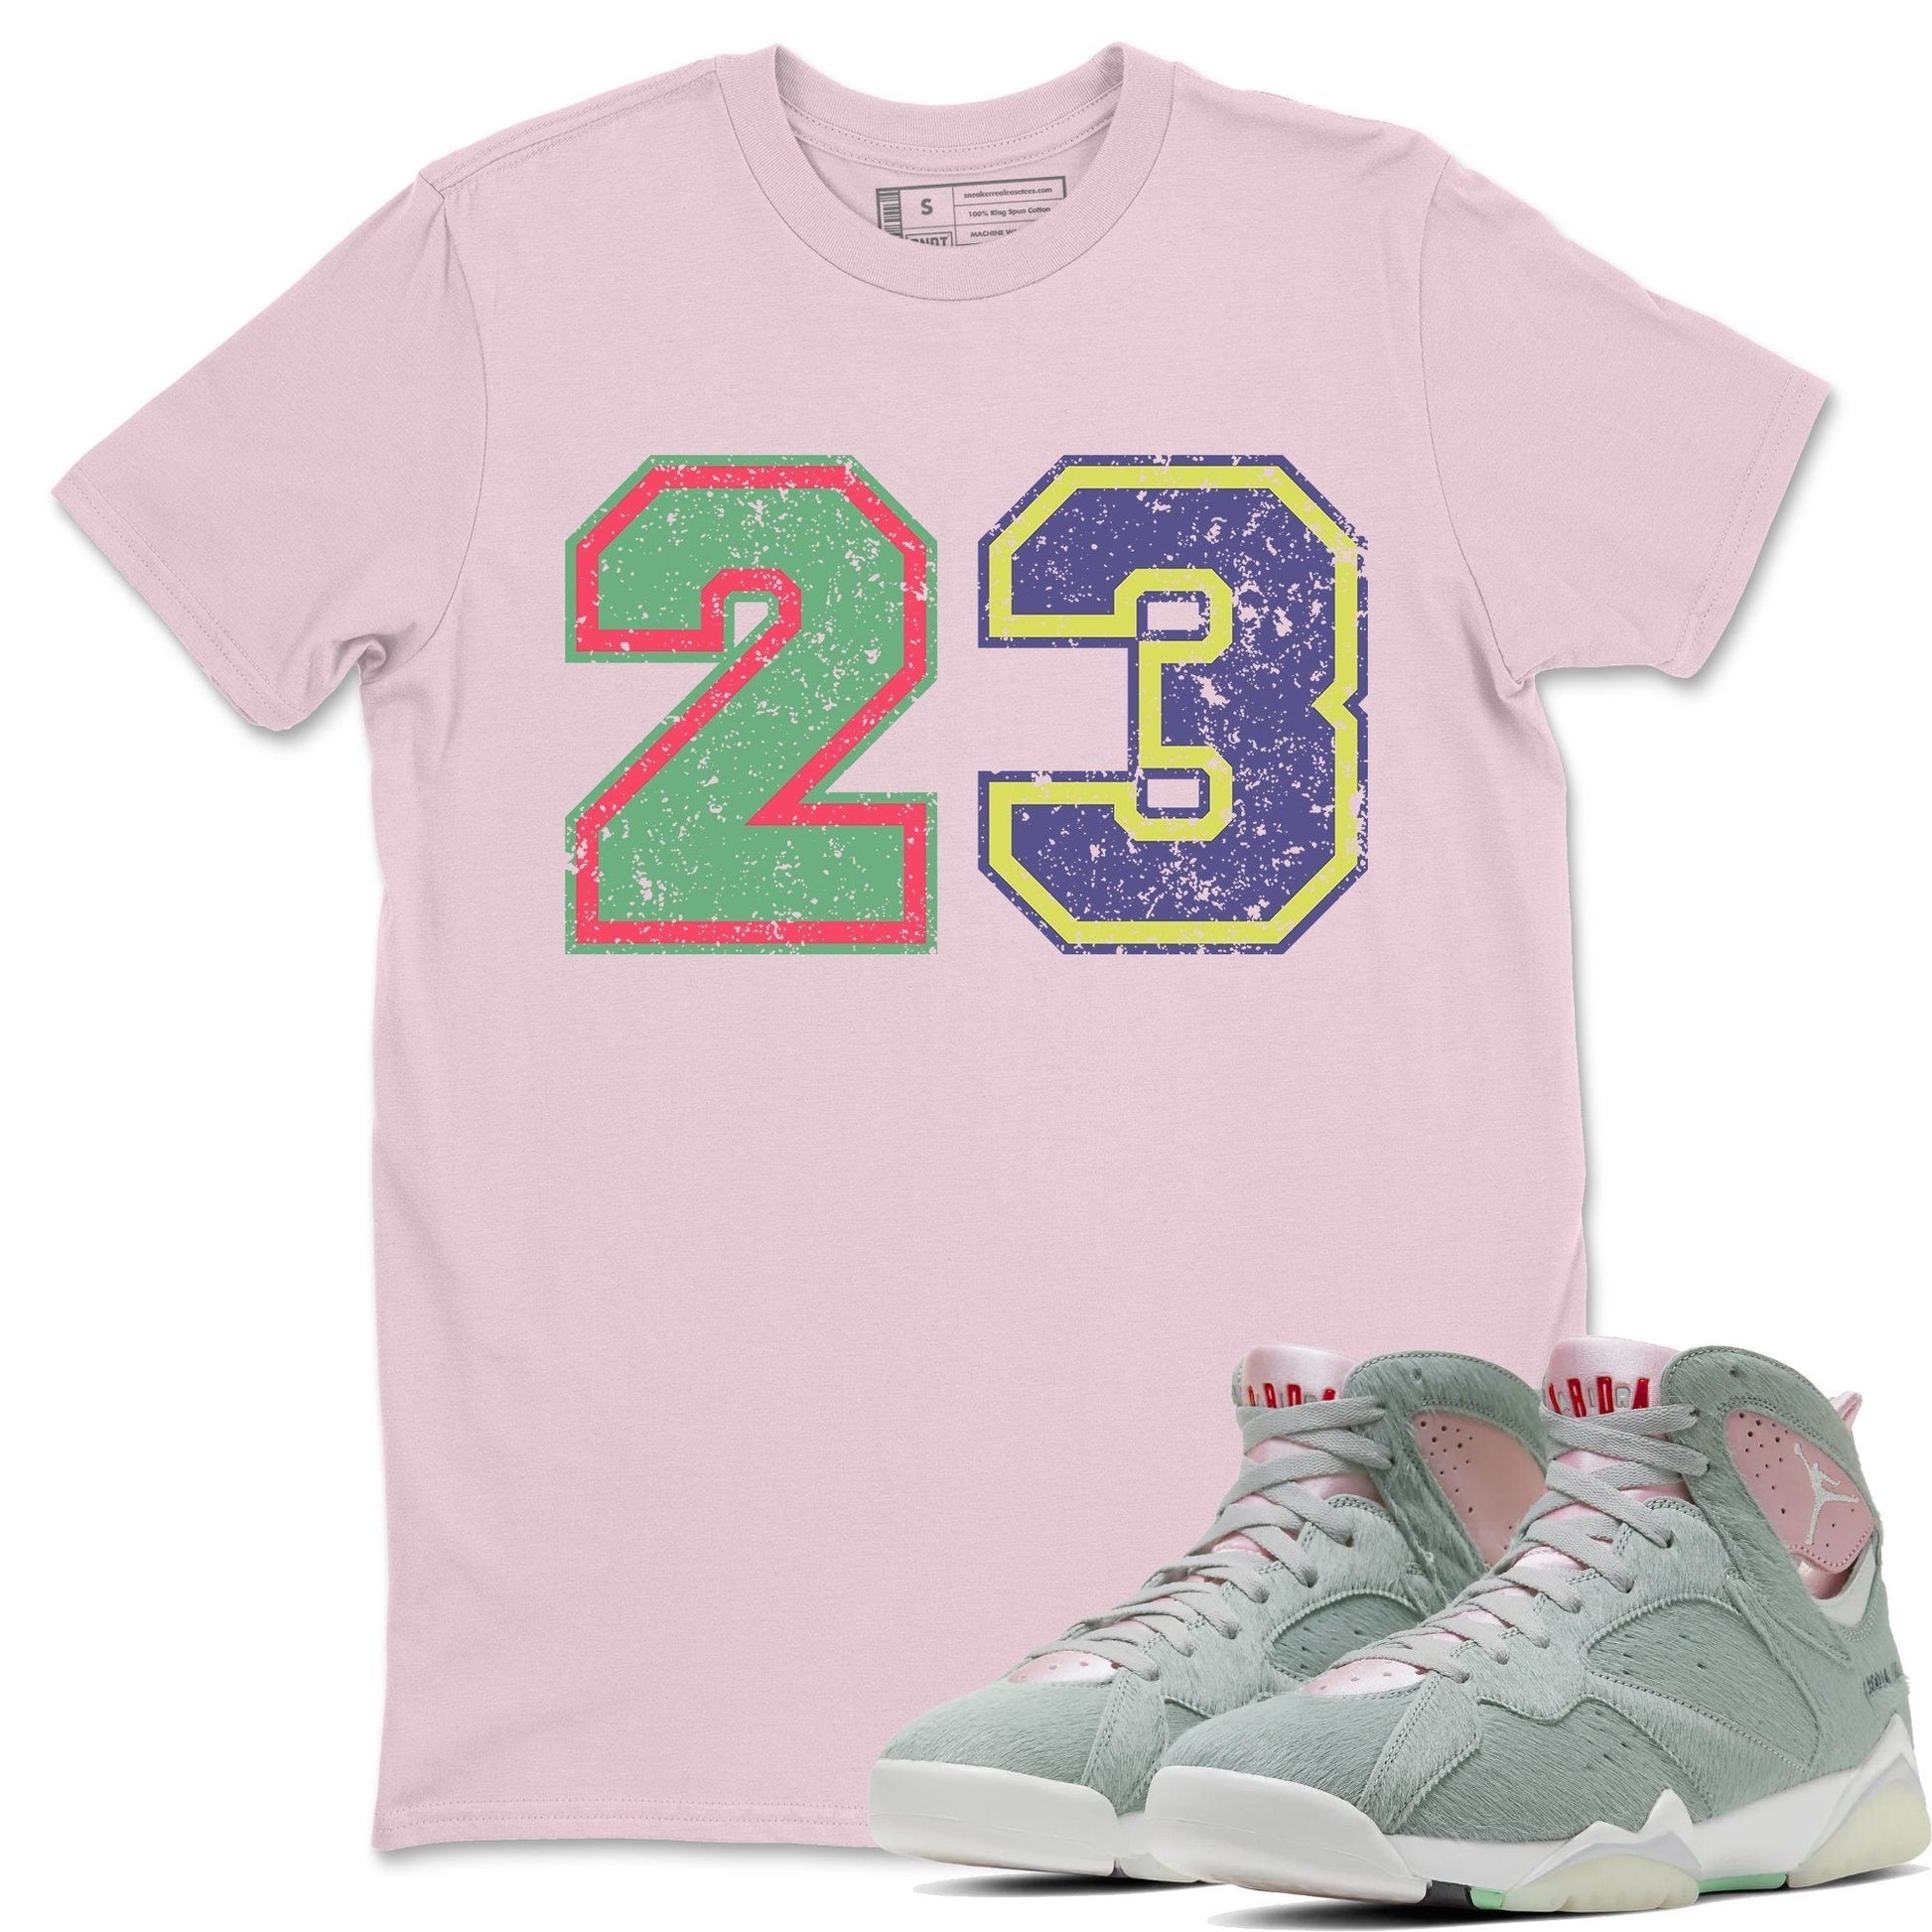 Jordan 7 Hare Sneaker Match Tees 23 Sneaker Tees Jordan 7 Hare Sneaker Release Tees Unisex Shirts